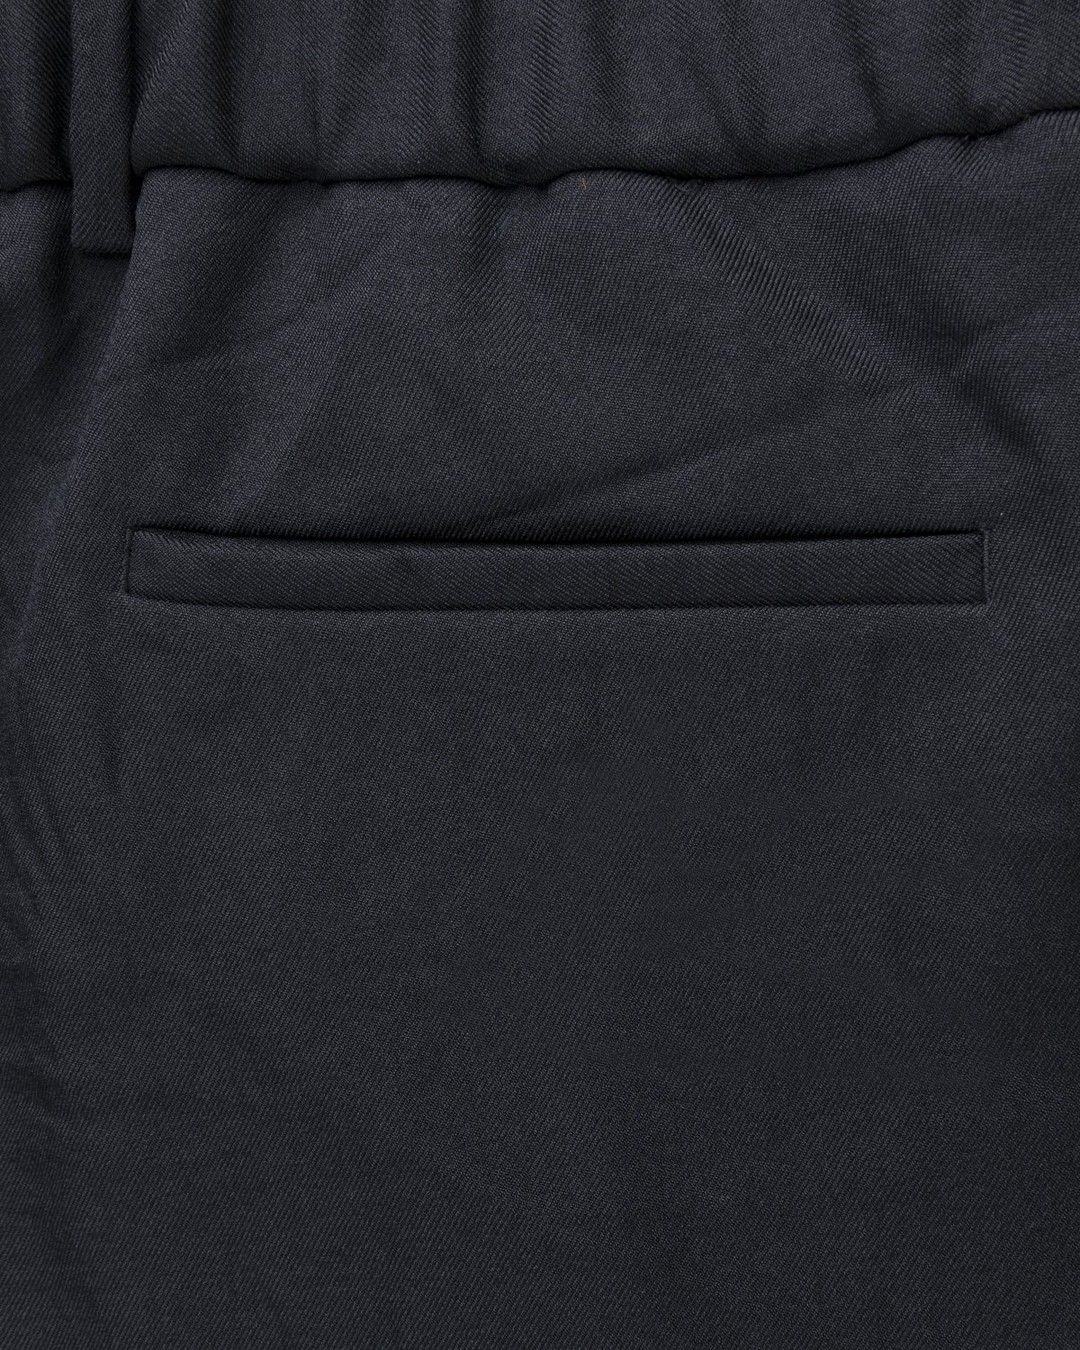 Jil Sander – Trousers Black - Pants - Black - Image 4